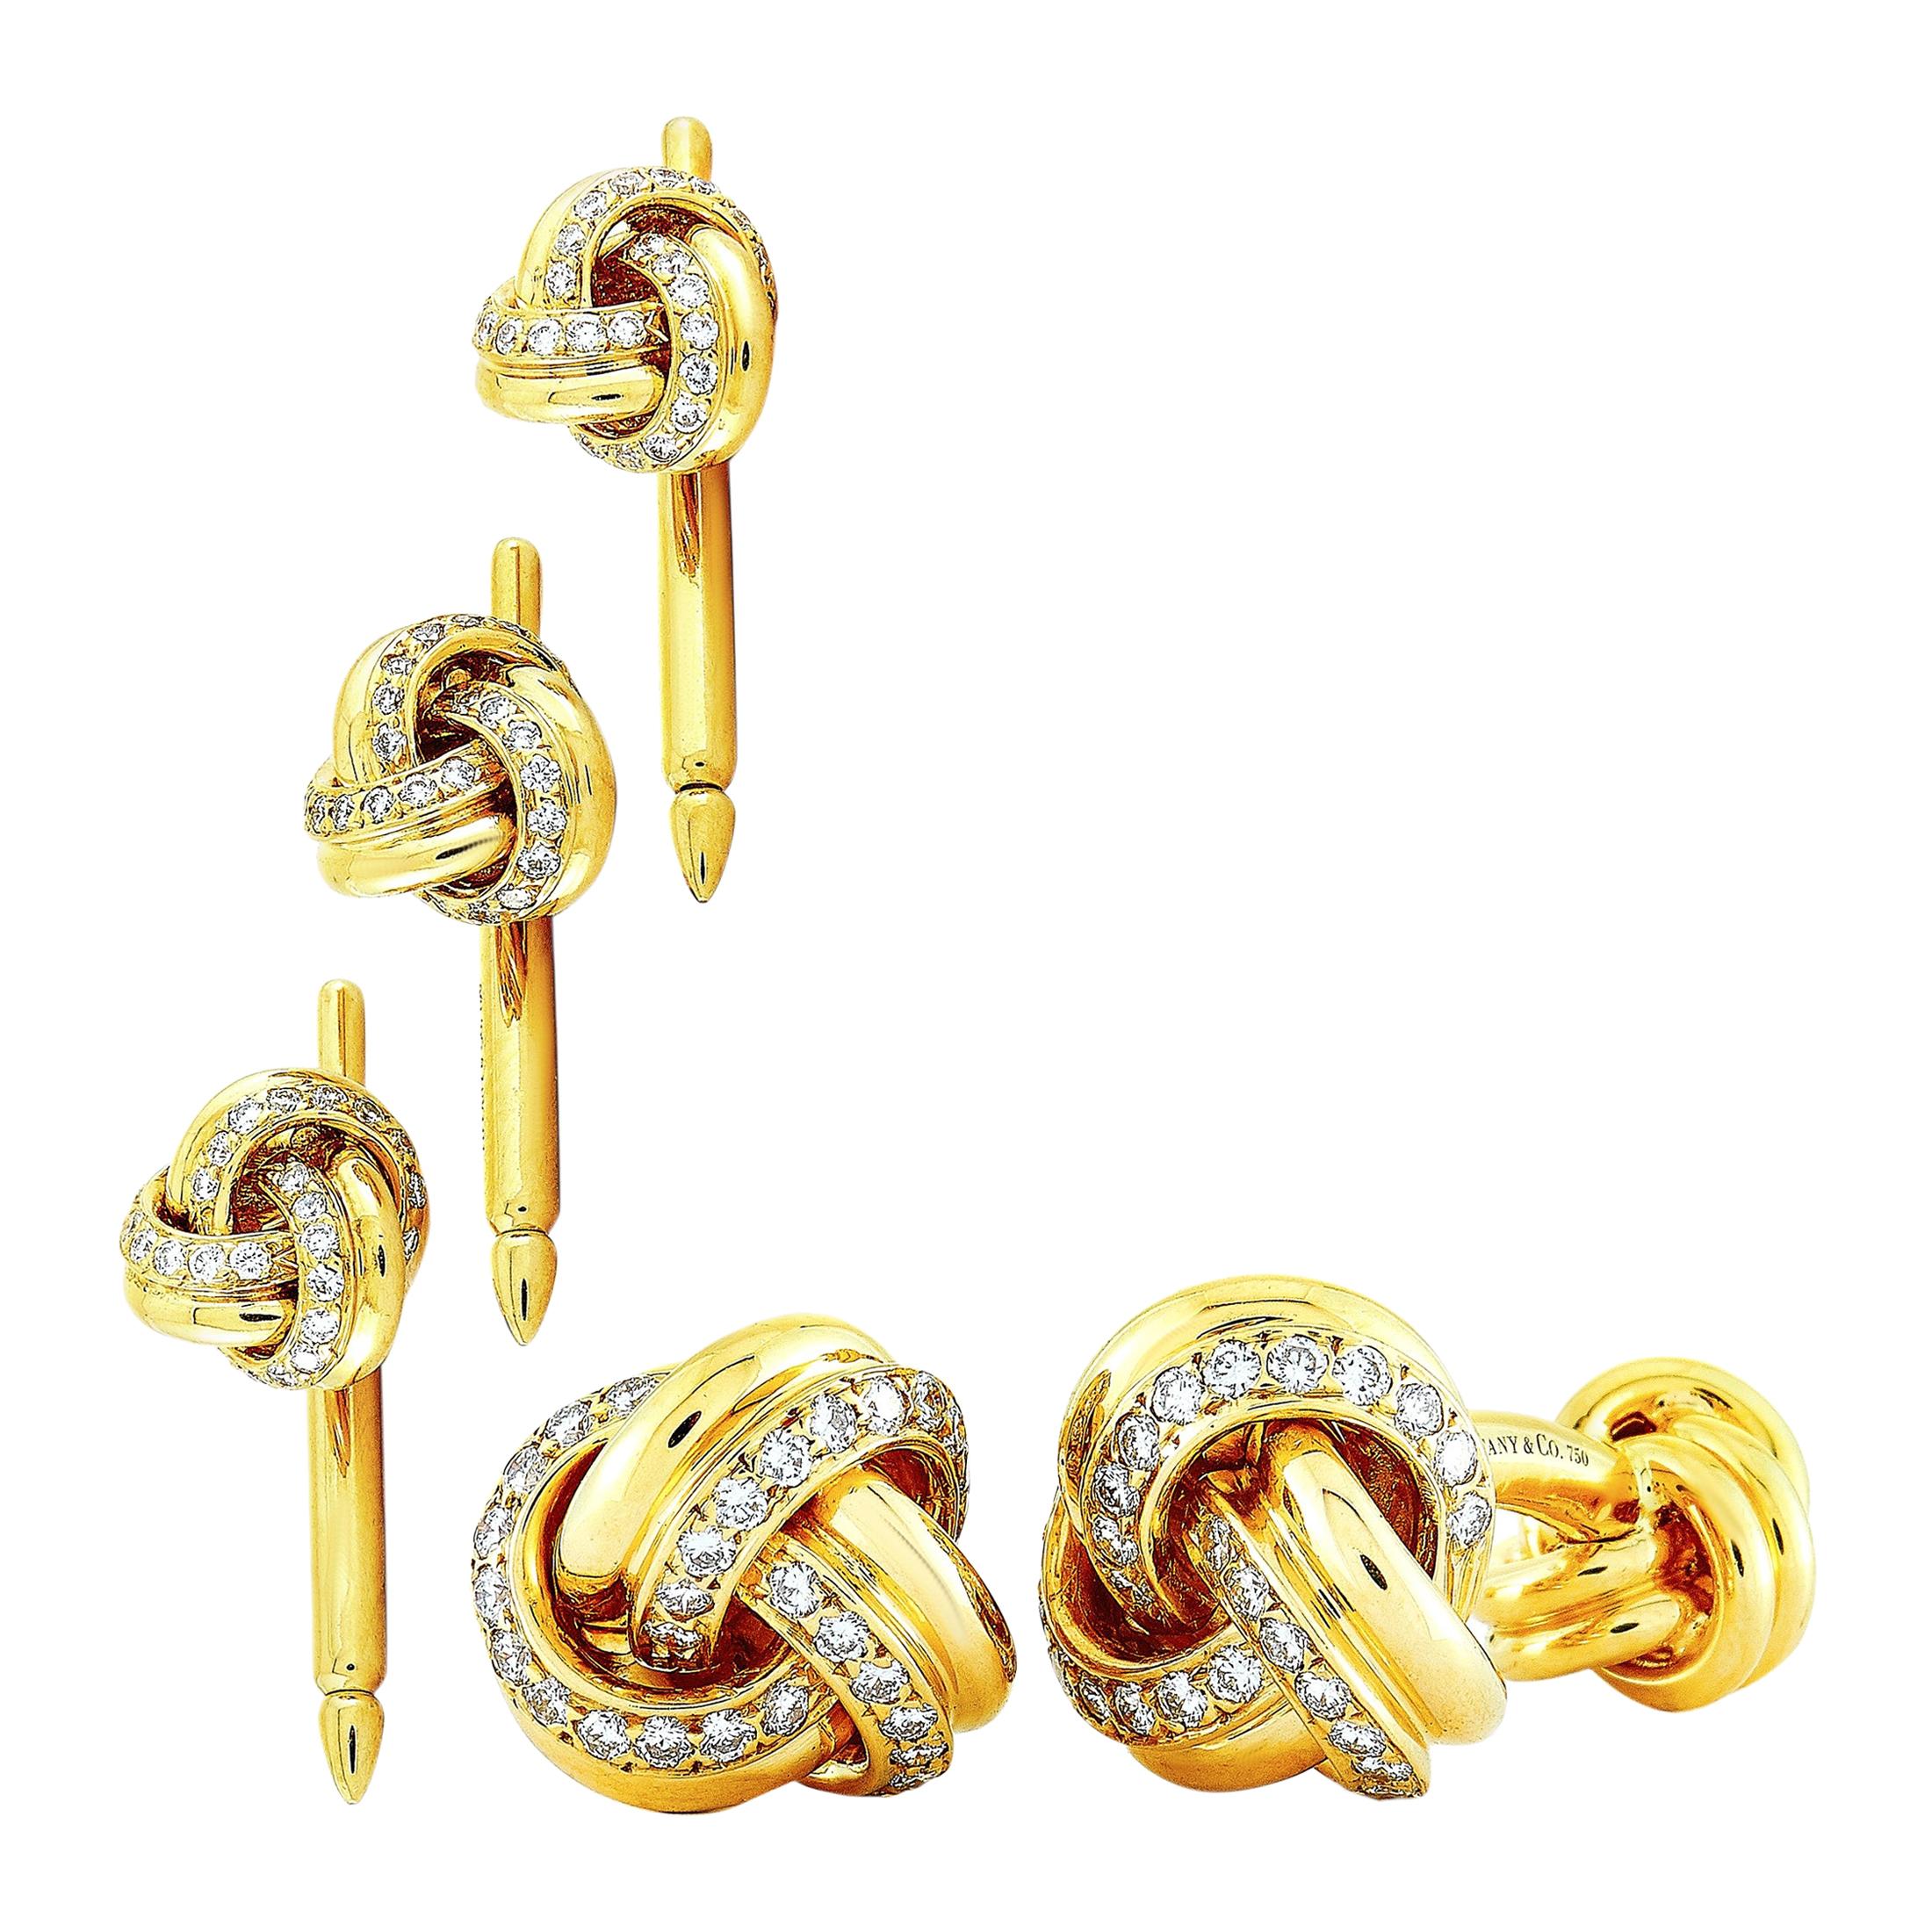 Tiffany & Co. 18 Karat Yellow Gold and 2.30 Carat Diamond Tuxedo Set